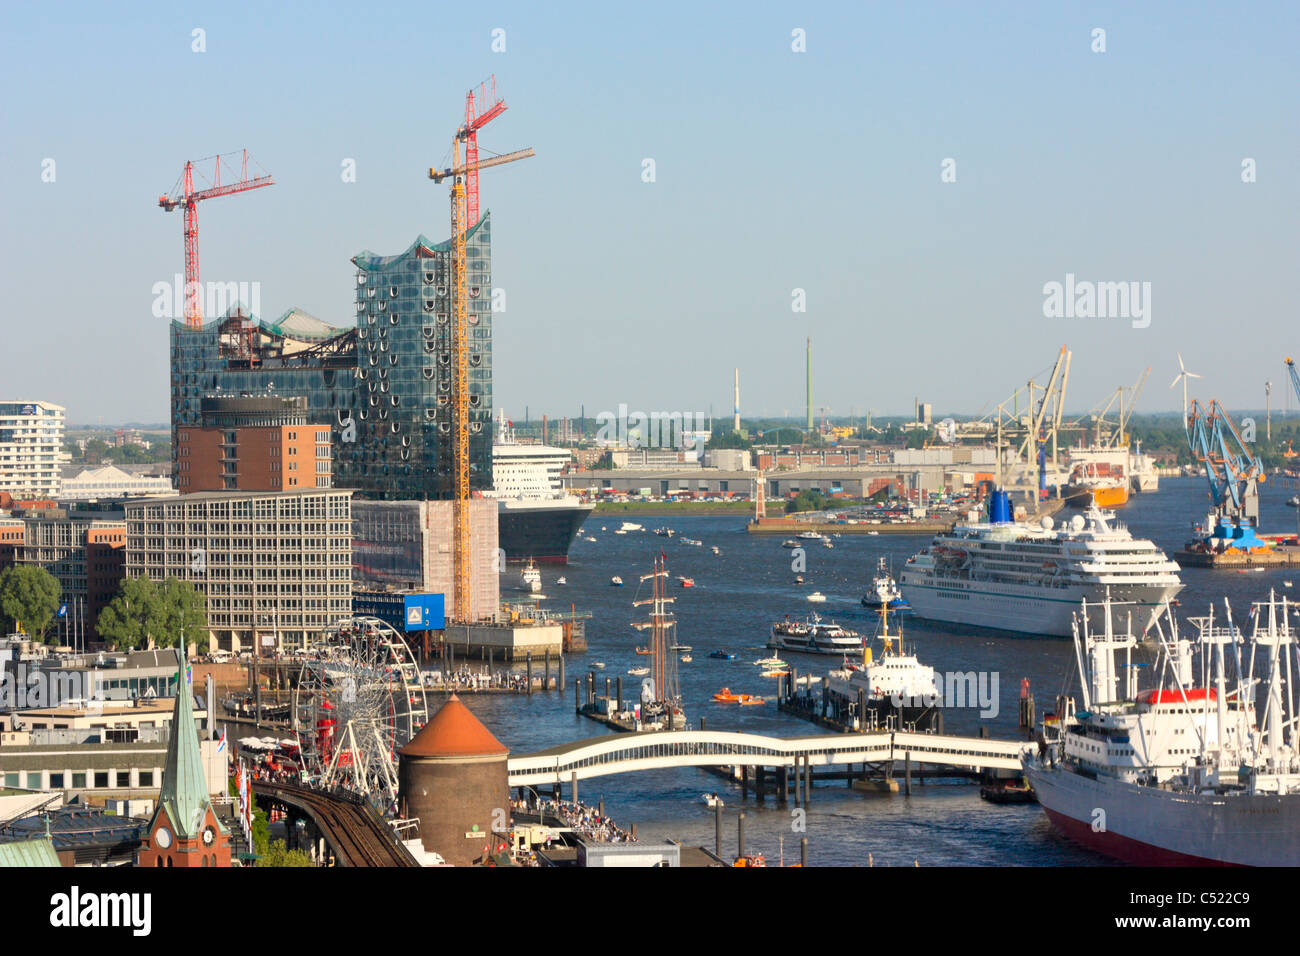 Elbphilharmonie, la nuova sala da concerto di Amburgo, Germania, Foto Stock